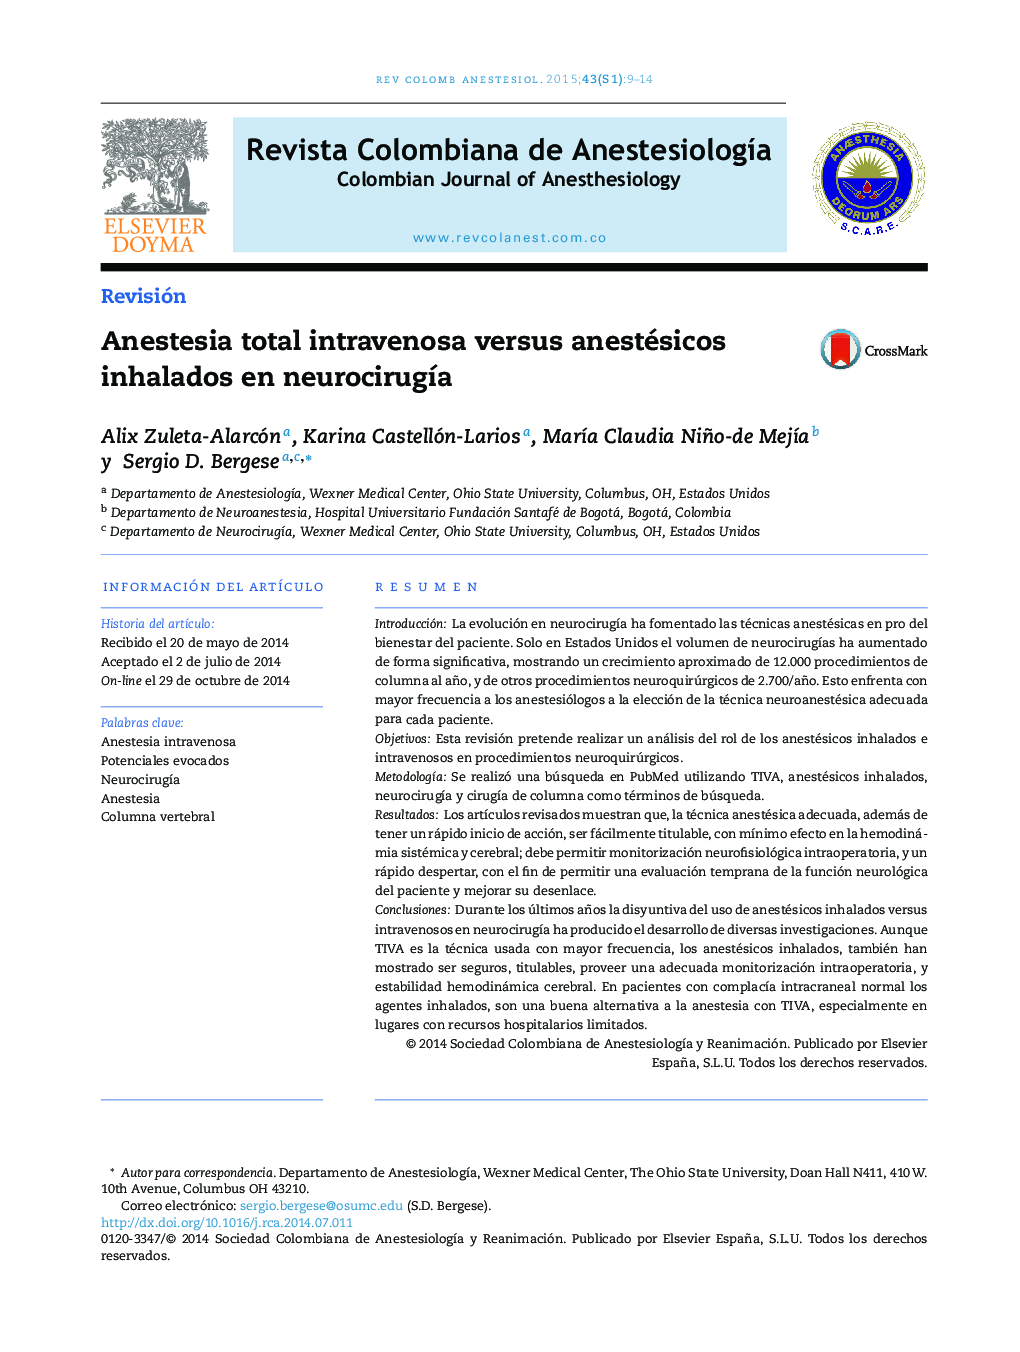 Anestesia total intravenosa versus anestésicos inhalados en neurocirugía